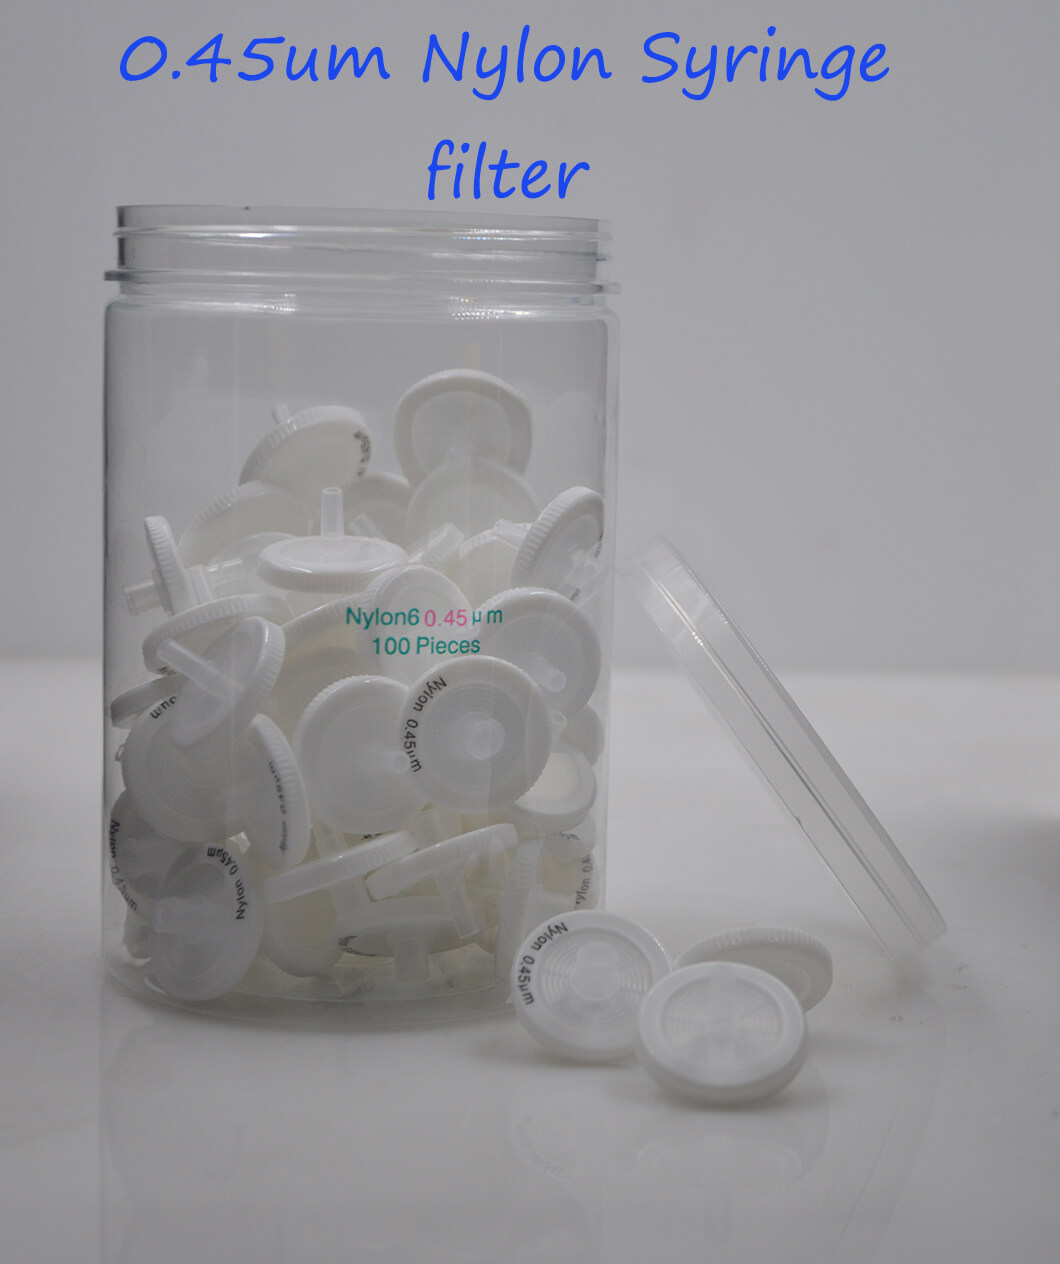 Nylon syringe filter